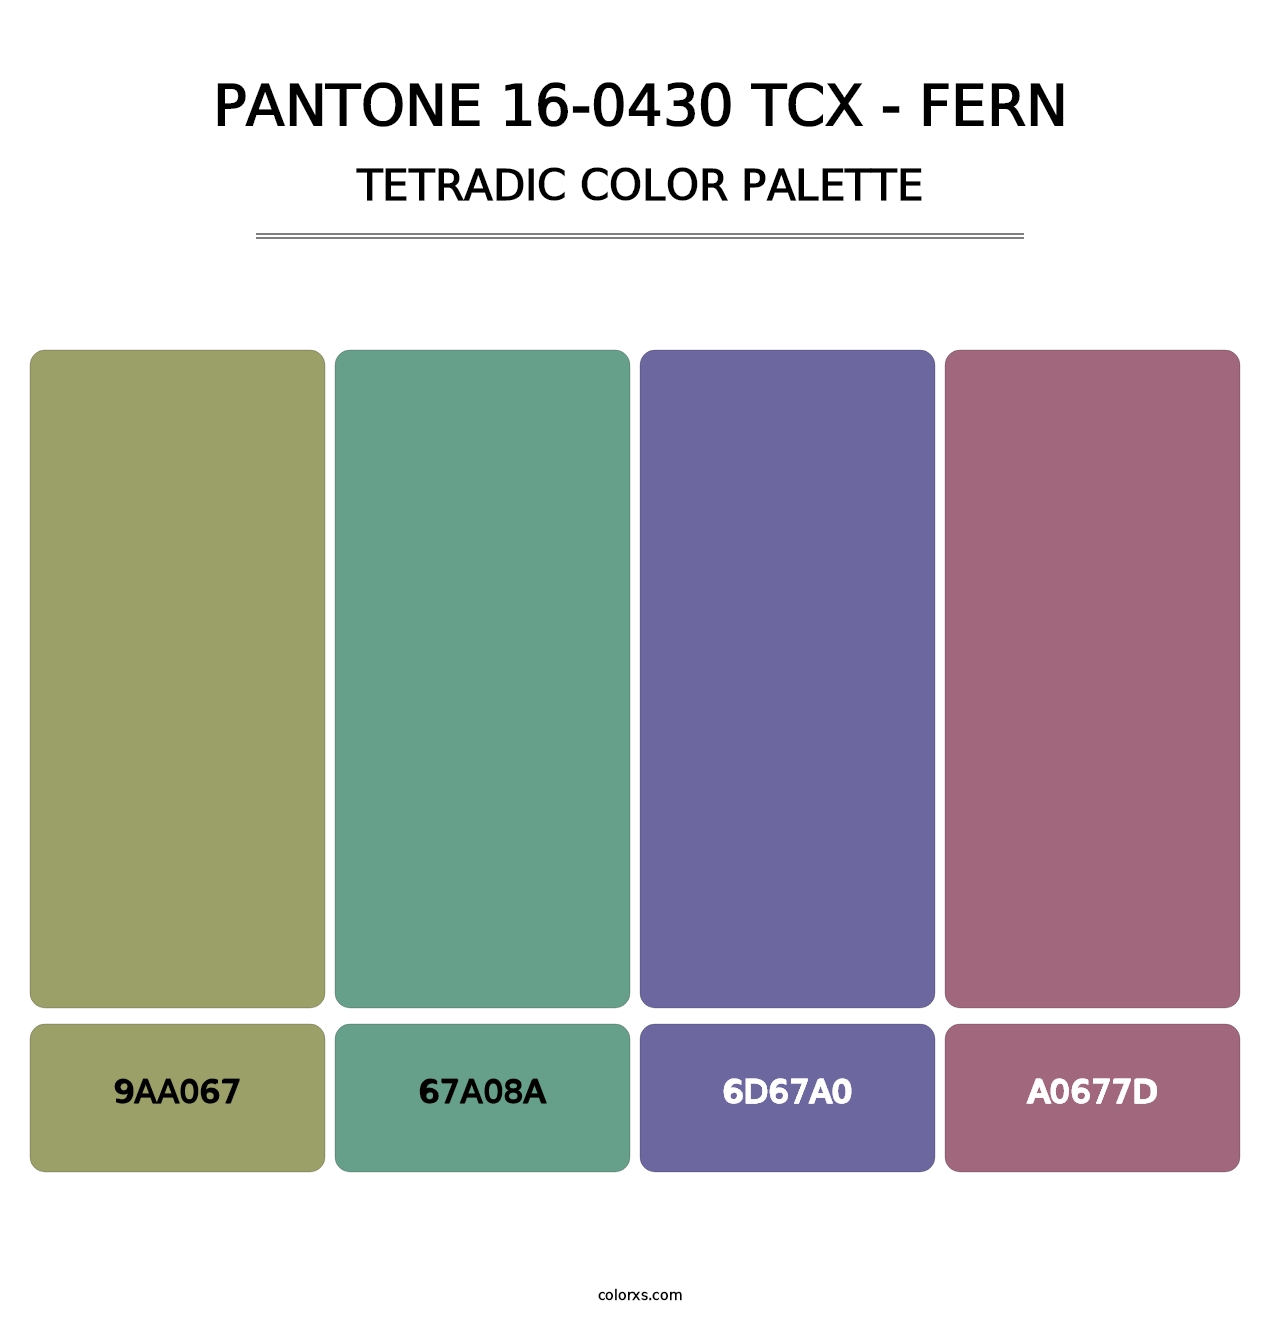 PANTONE 16-0430 TCX - Fern - Tetradic Color Palette